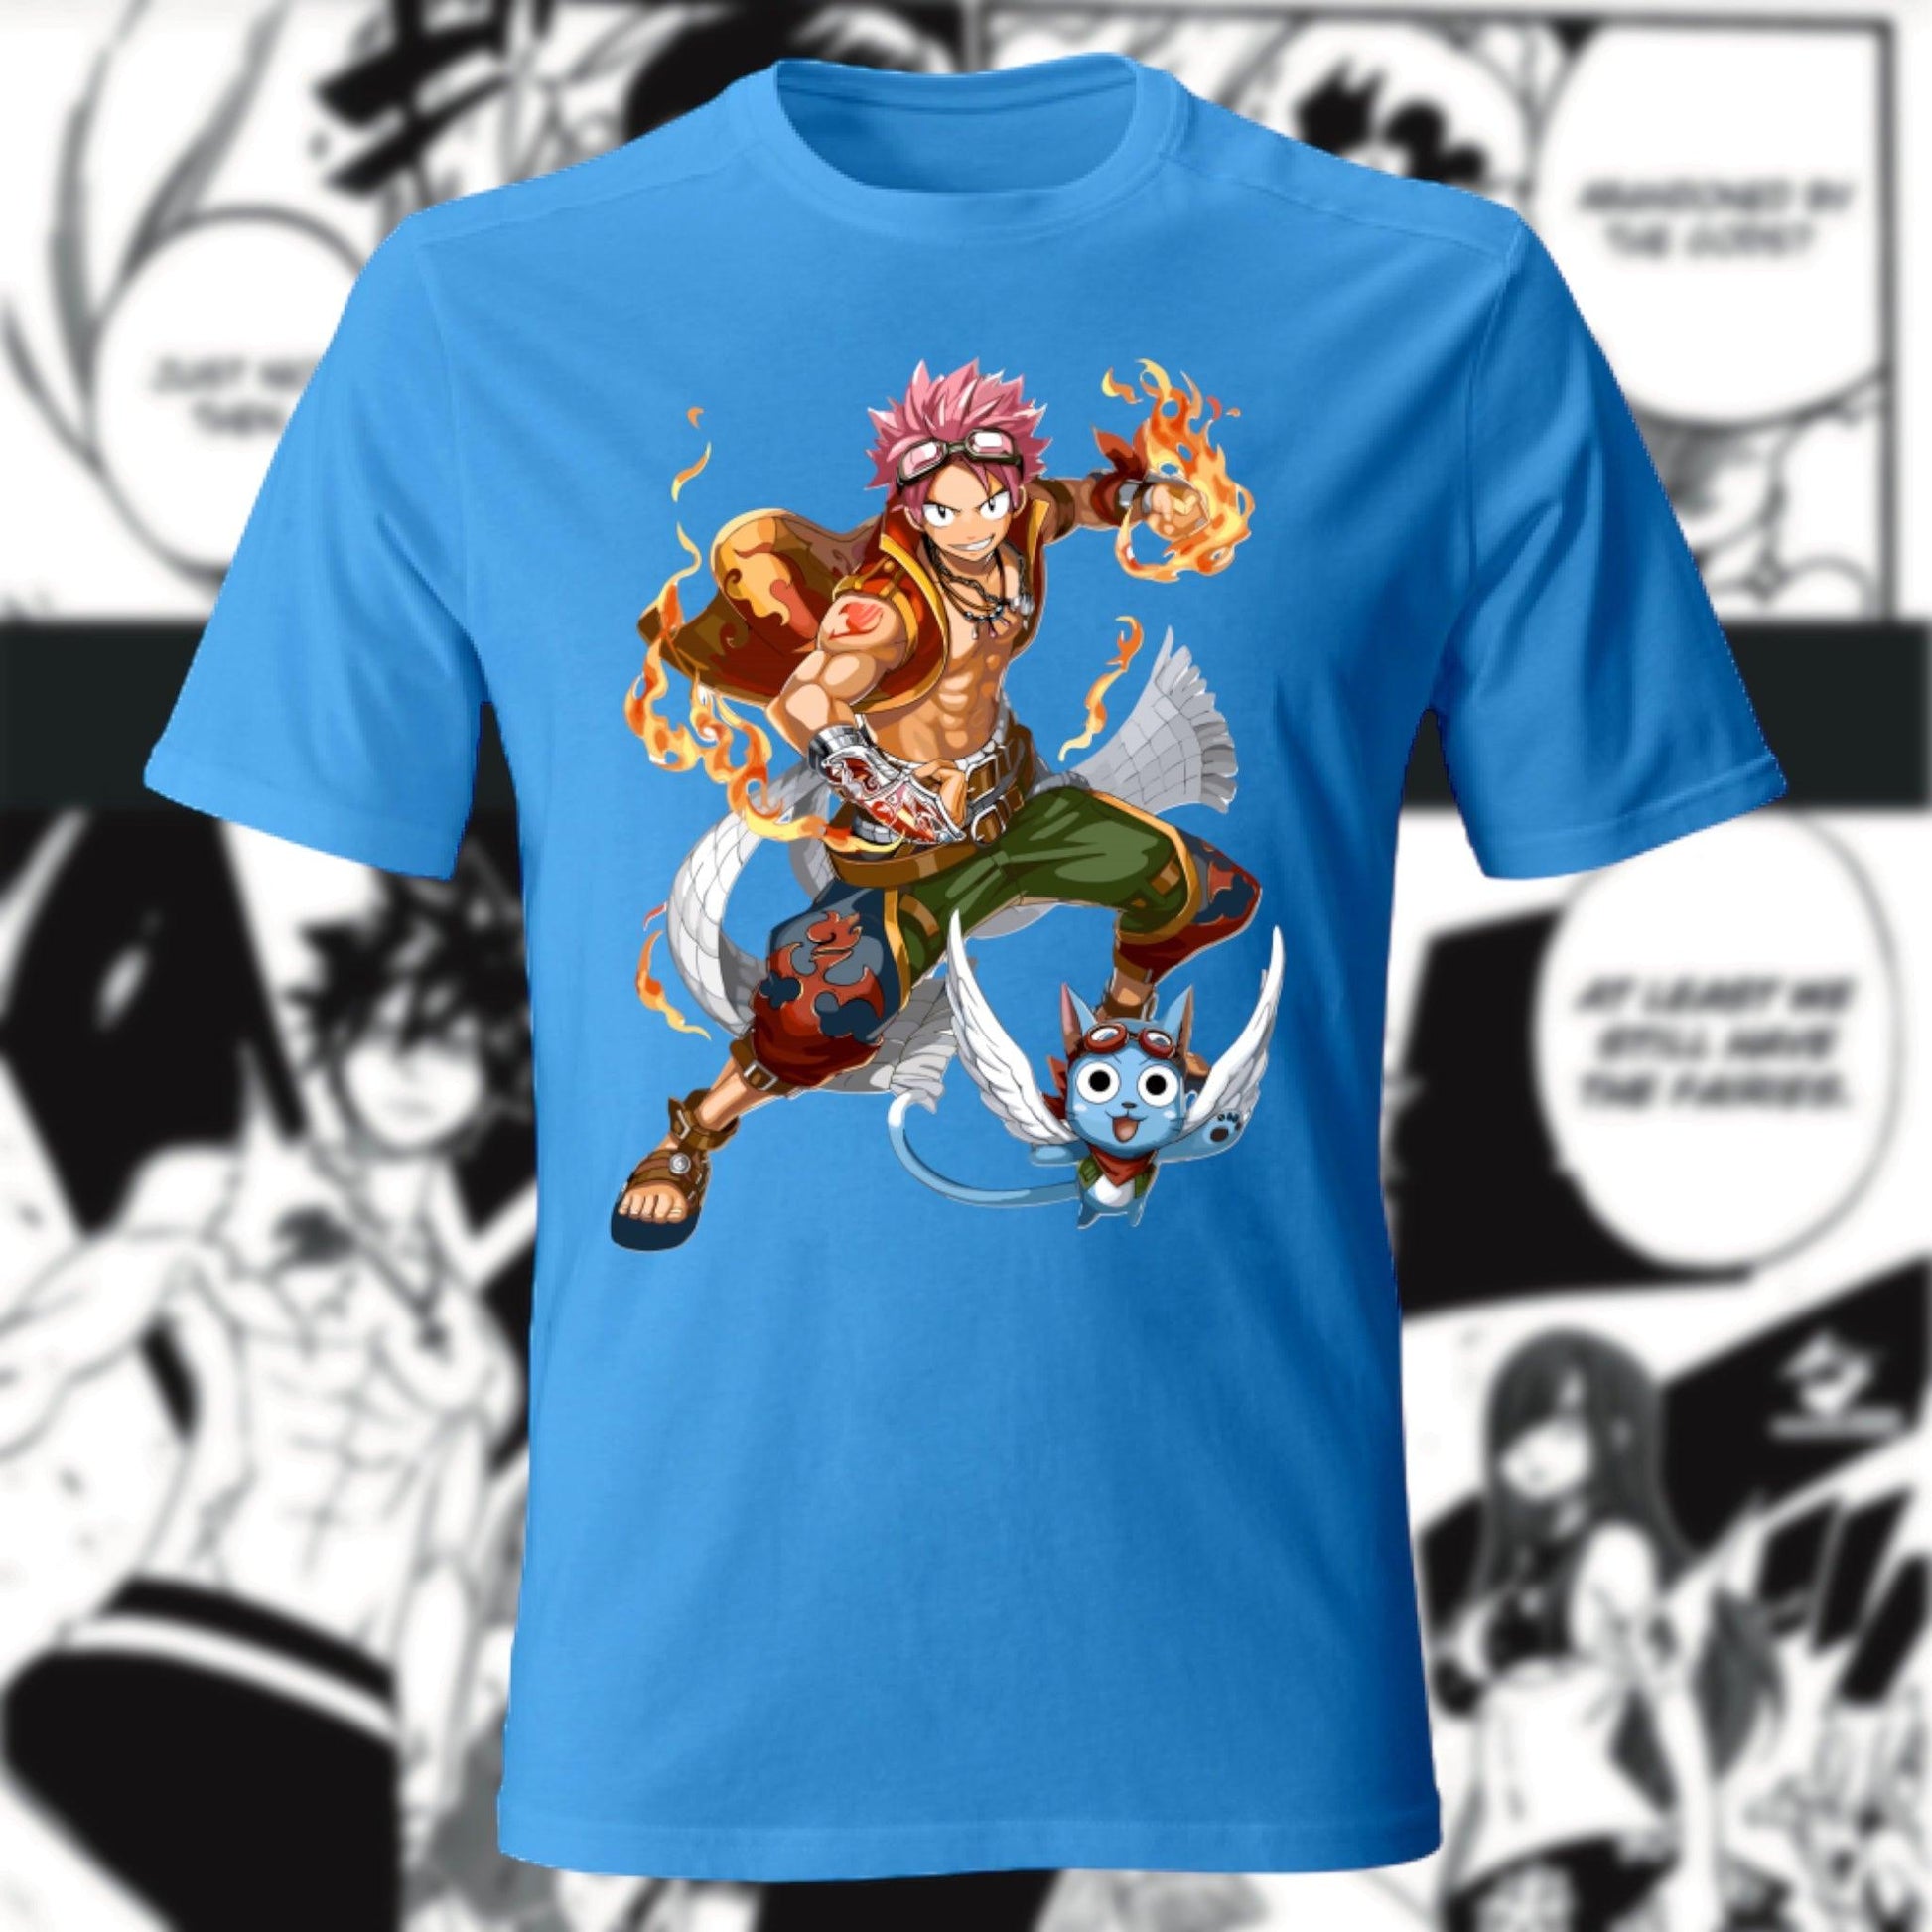 Otaku Hub Store T-Shirt Unisex T-Shirt Unisex Natsu & Happy Fairy Tail Anime, Abbigliamento anime, anime store, accessori anime, manga, manga store, abbigliamento manga accessori manga